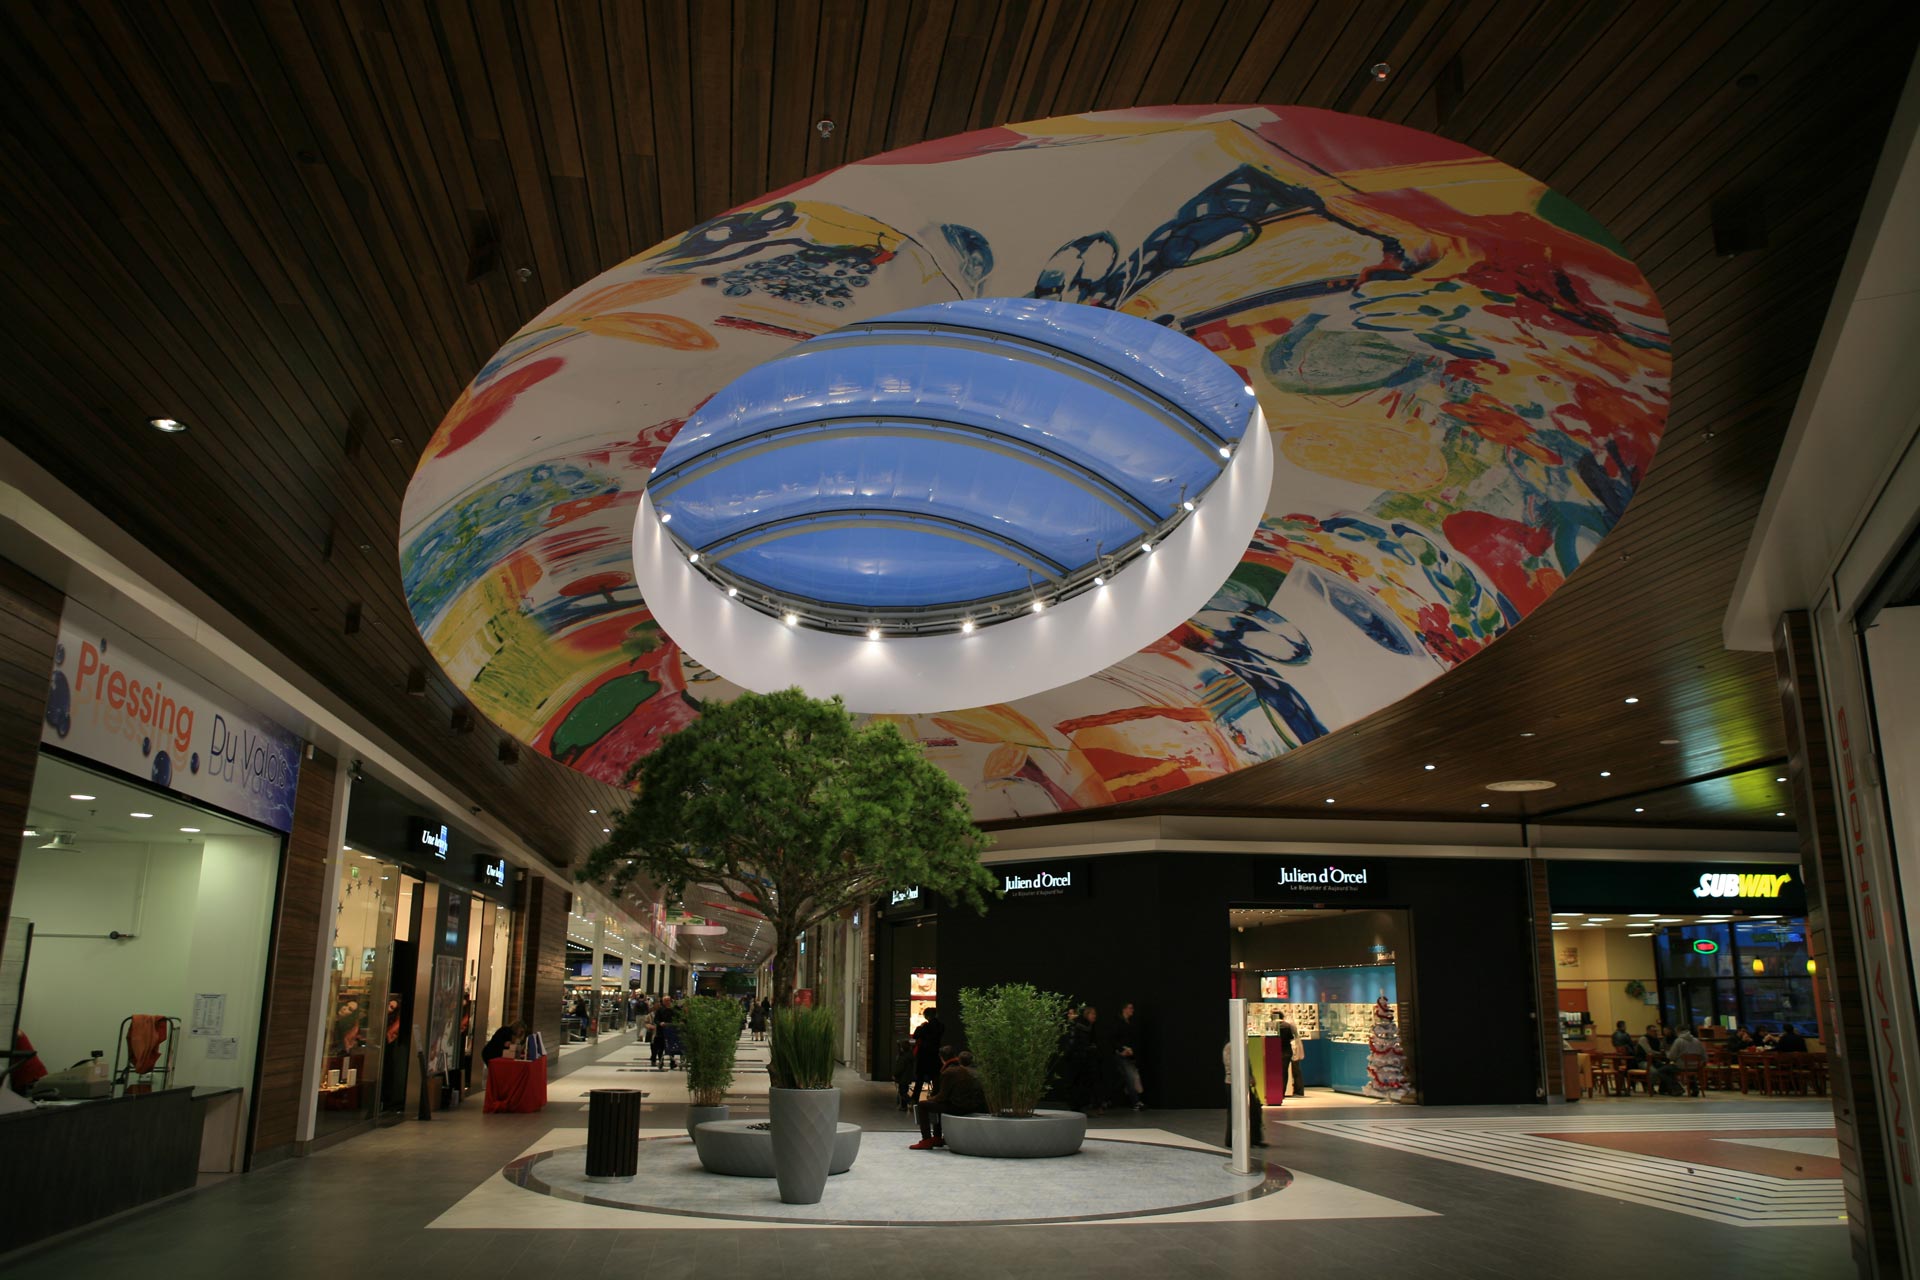 Cubierta ETFE vista des de dentro del centro comercial Leclerc